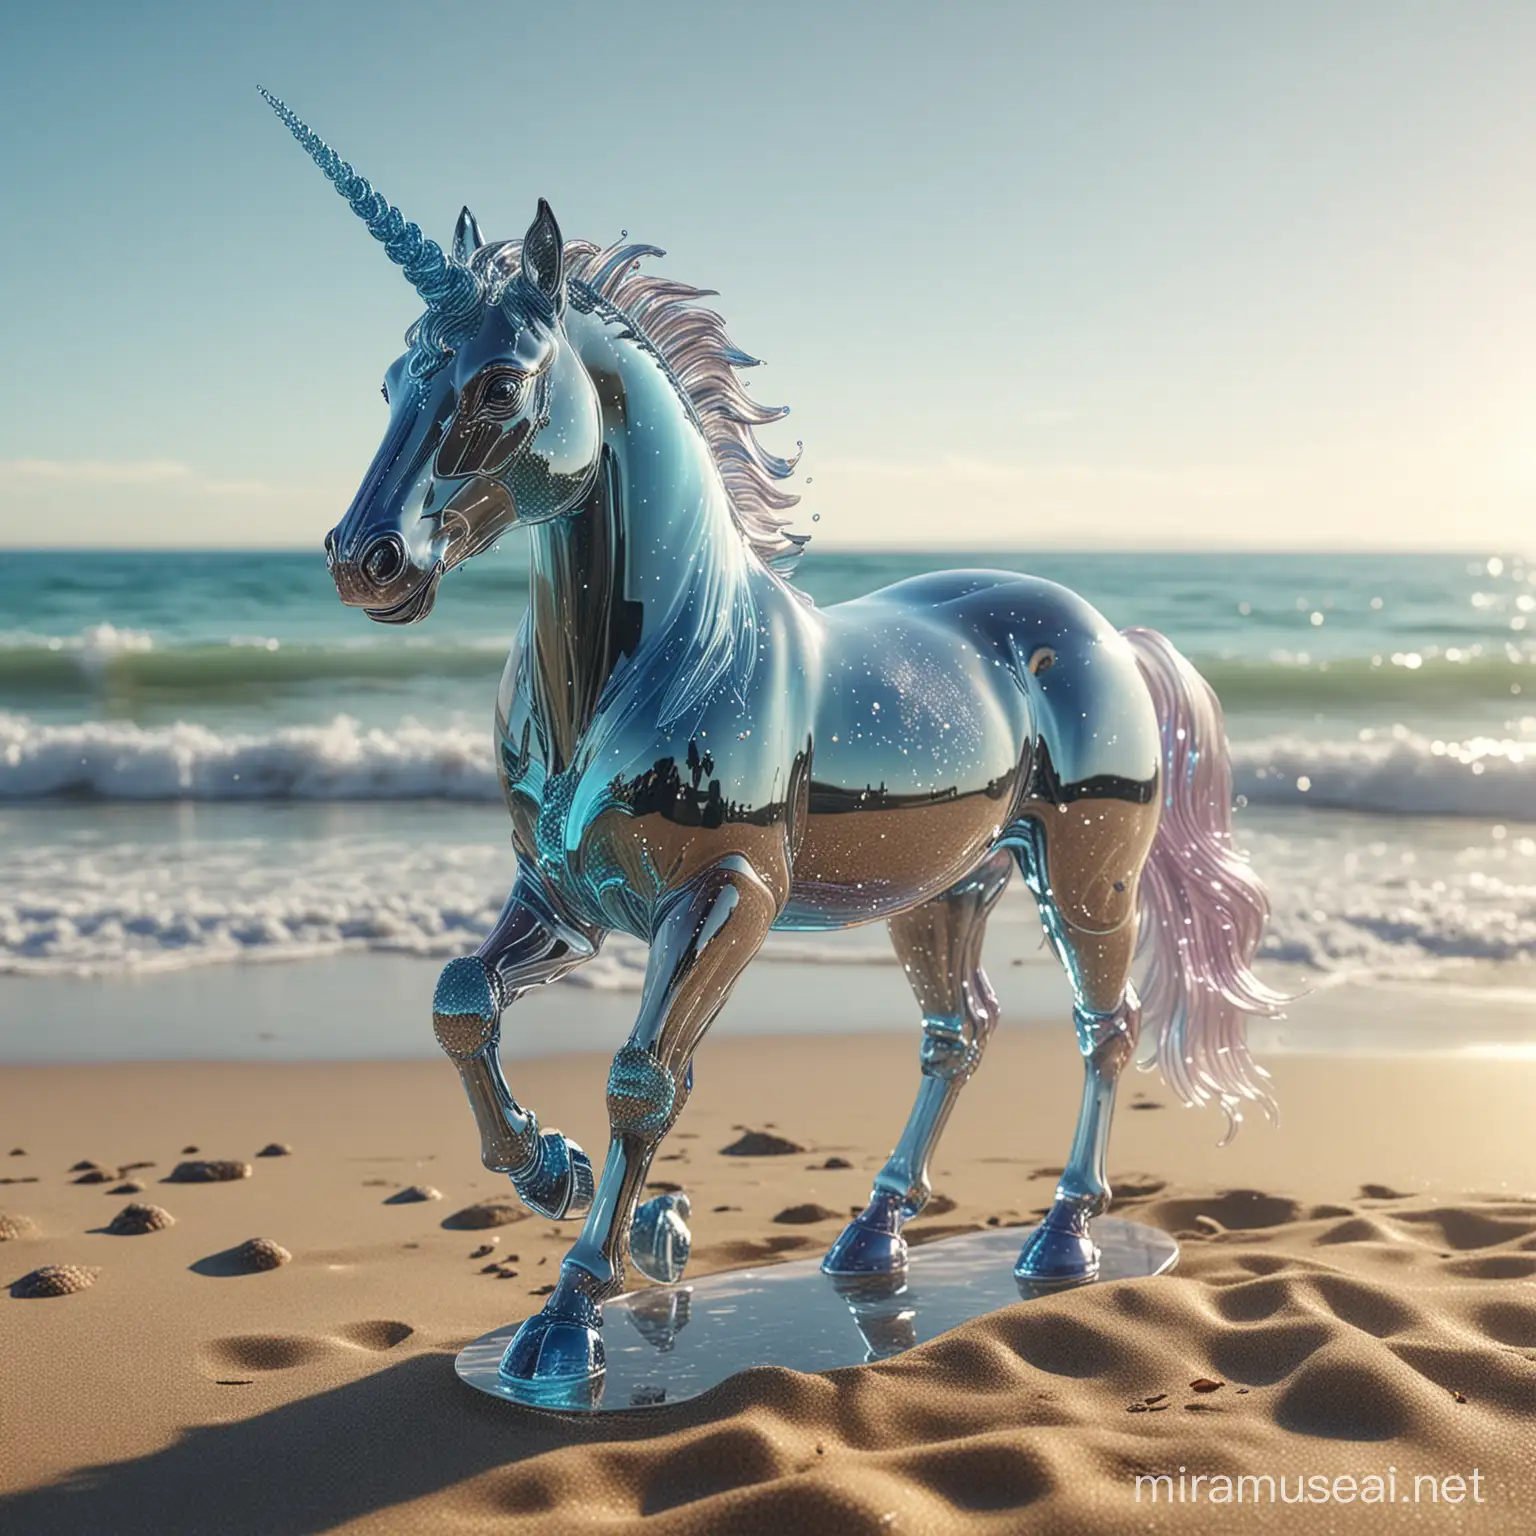 Transparent 3D Glass Unicorn by the Beach 8K Ultra HD Fantasy Art